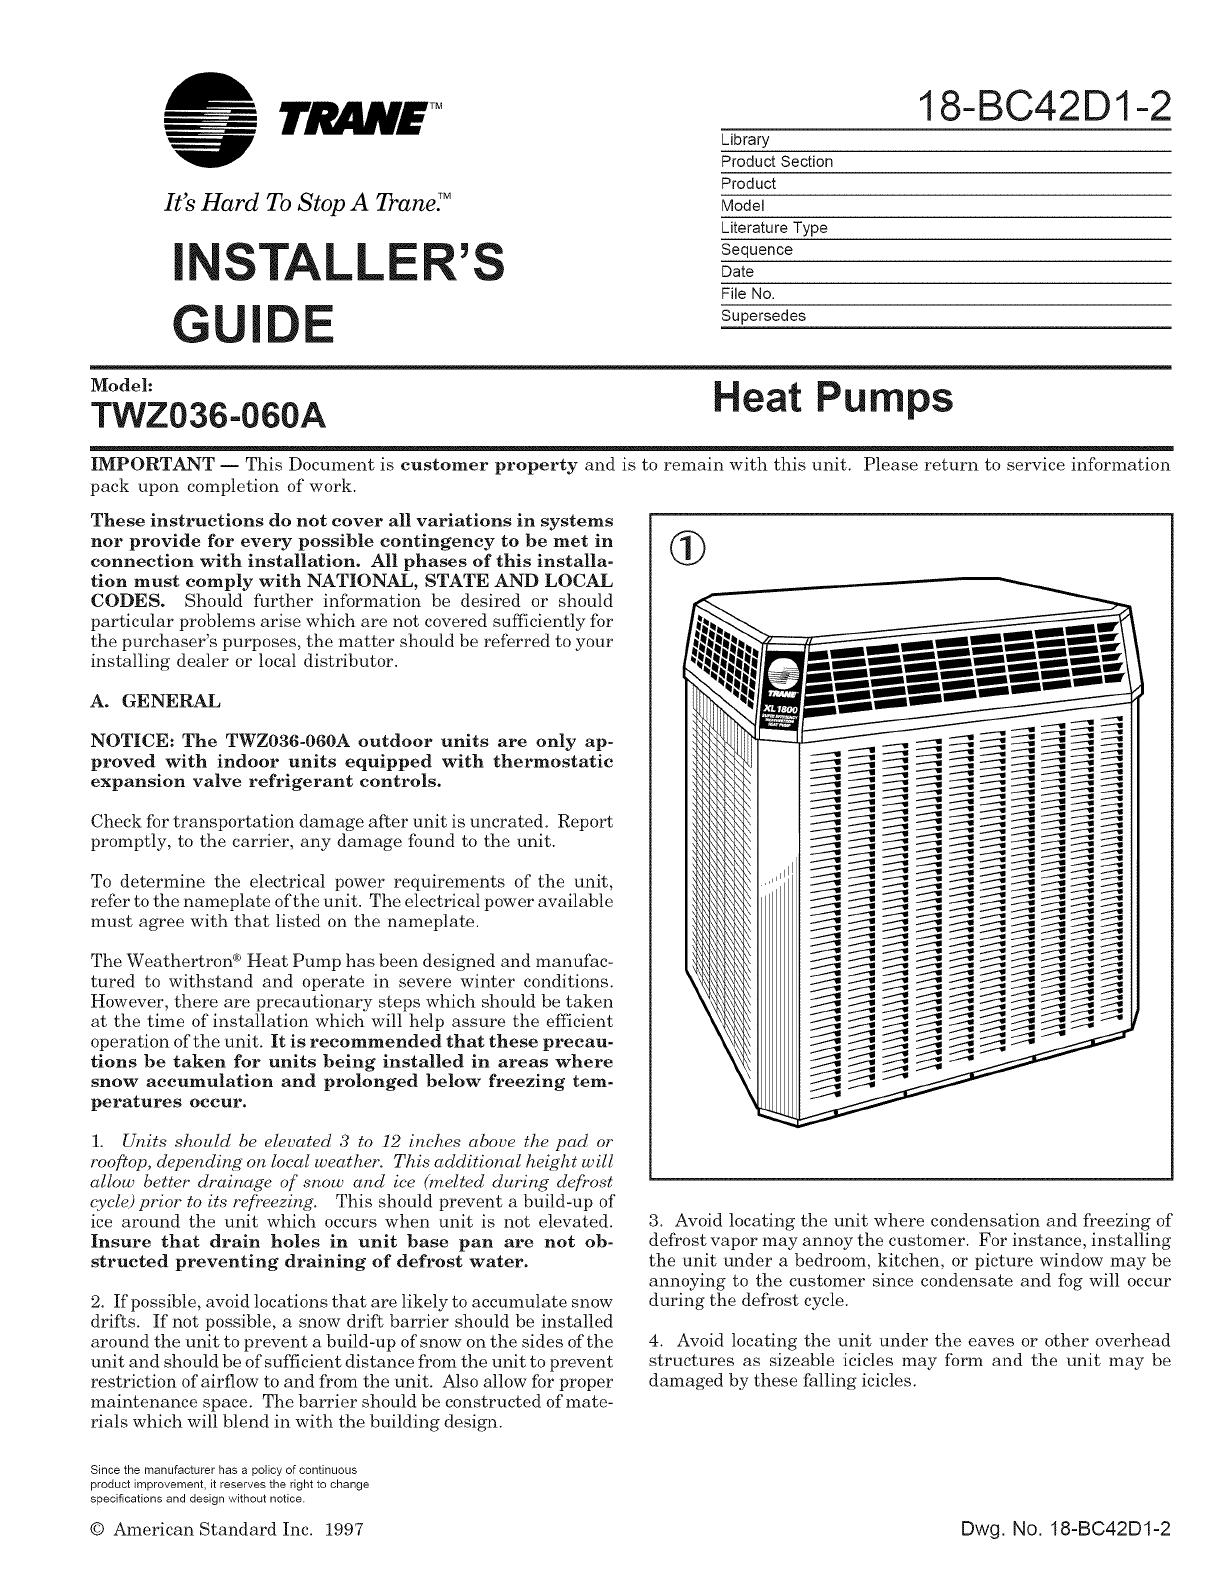 Trane Air Conditioner Heat Pump Outside Unit Manual L0810502